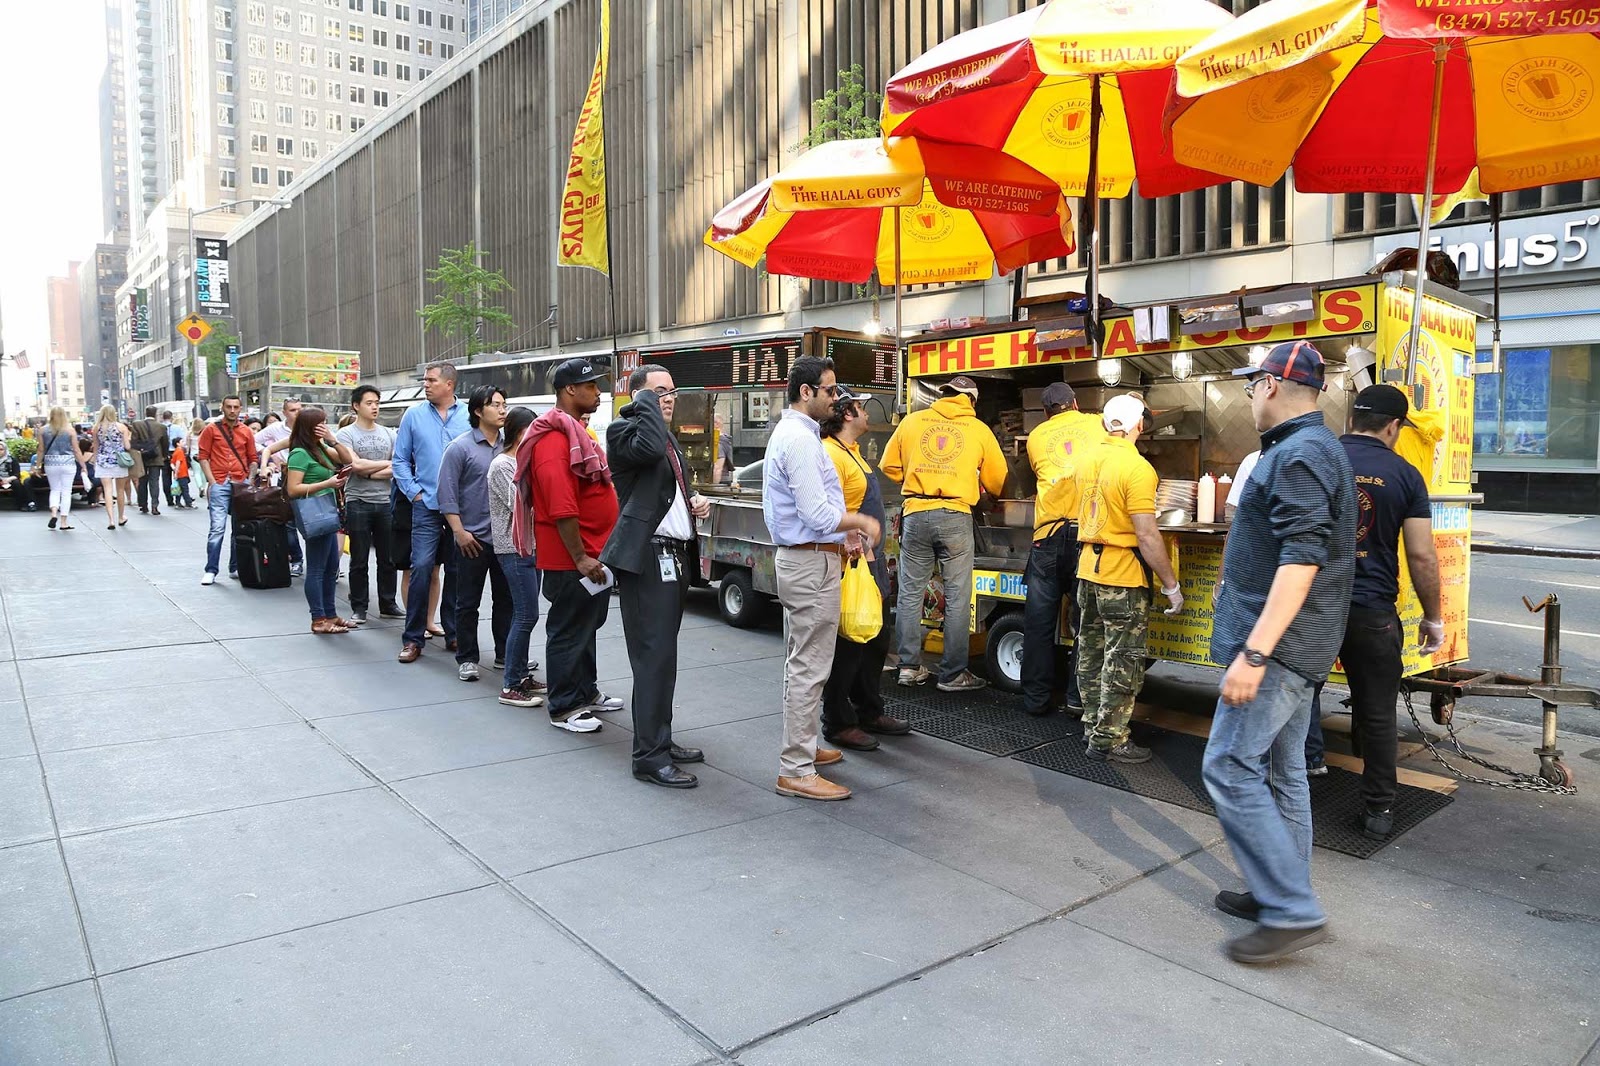 Misbrug løn grave FOOD TRUCK REVIEW: All hail New York's Halal Guys food truck